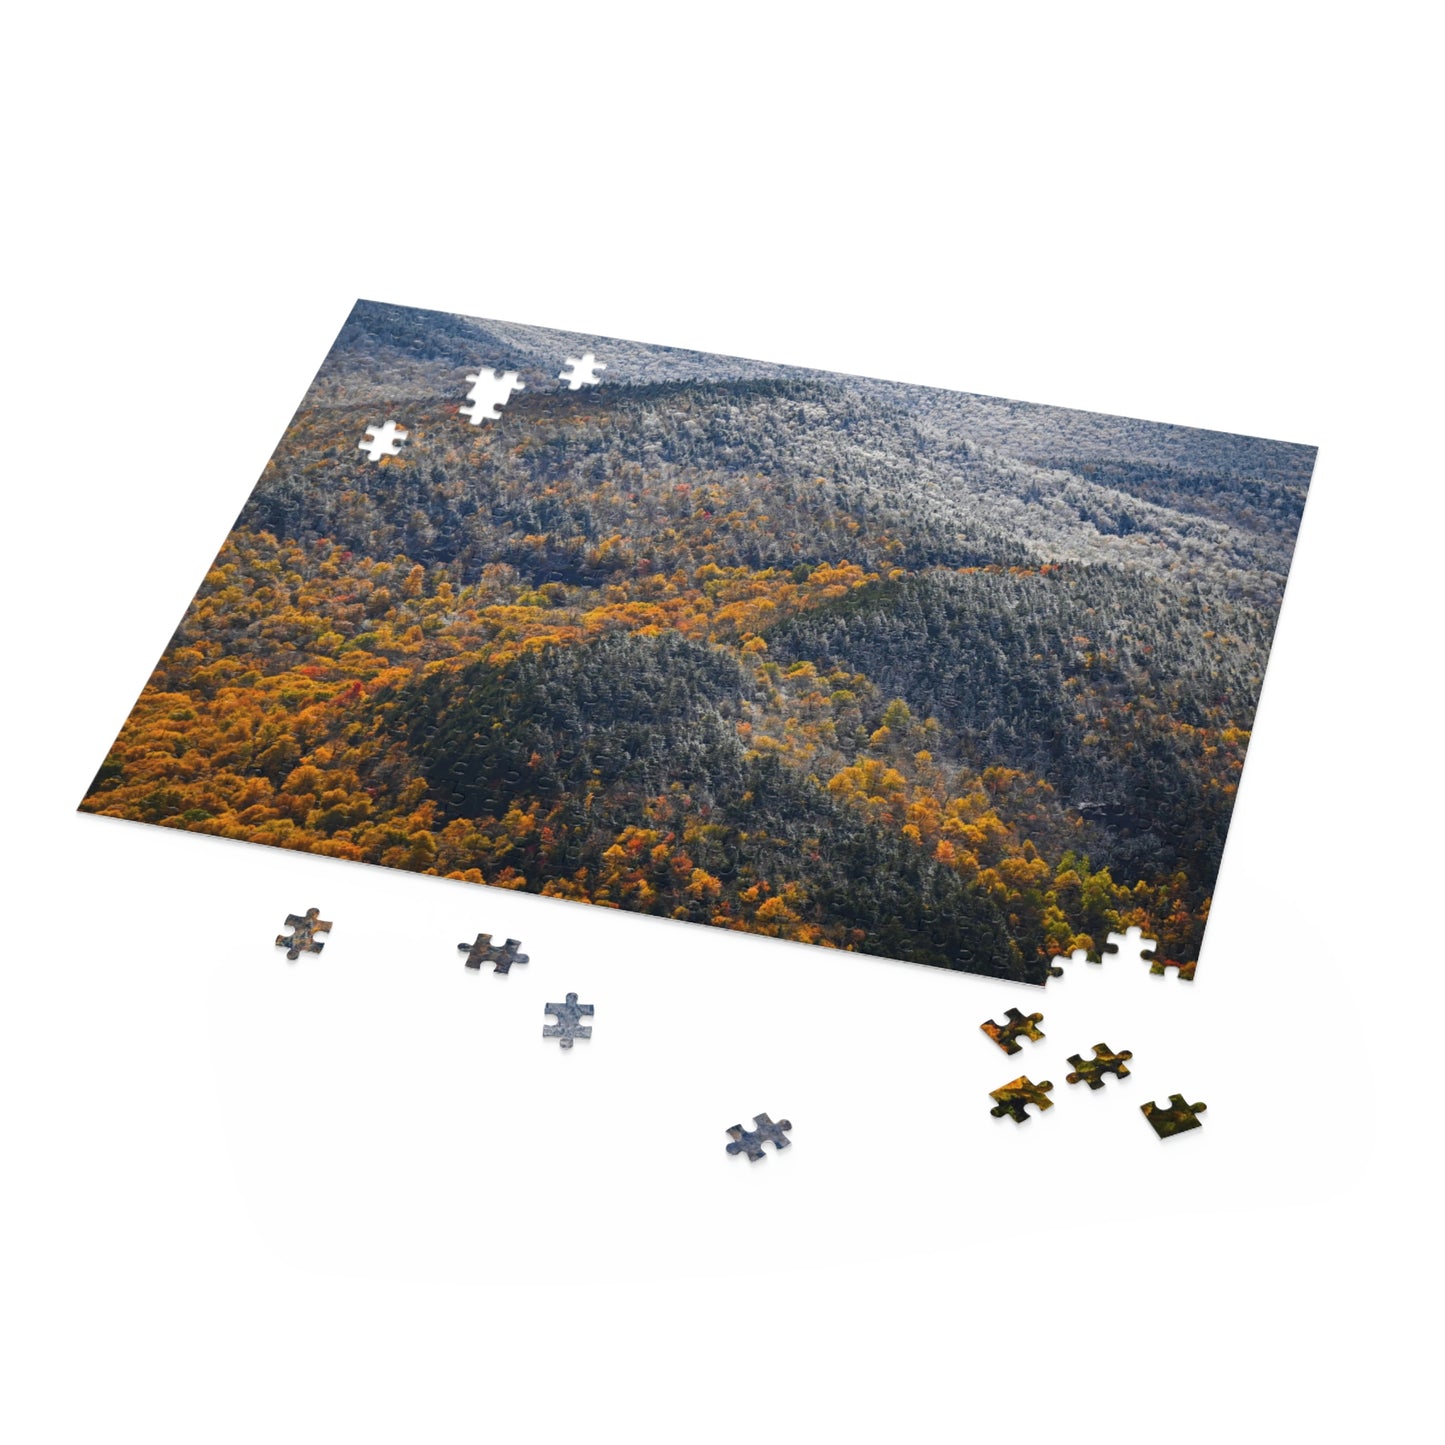 Puzzle - Seasons Collide